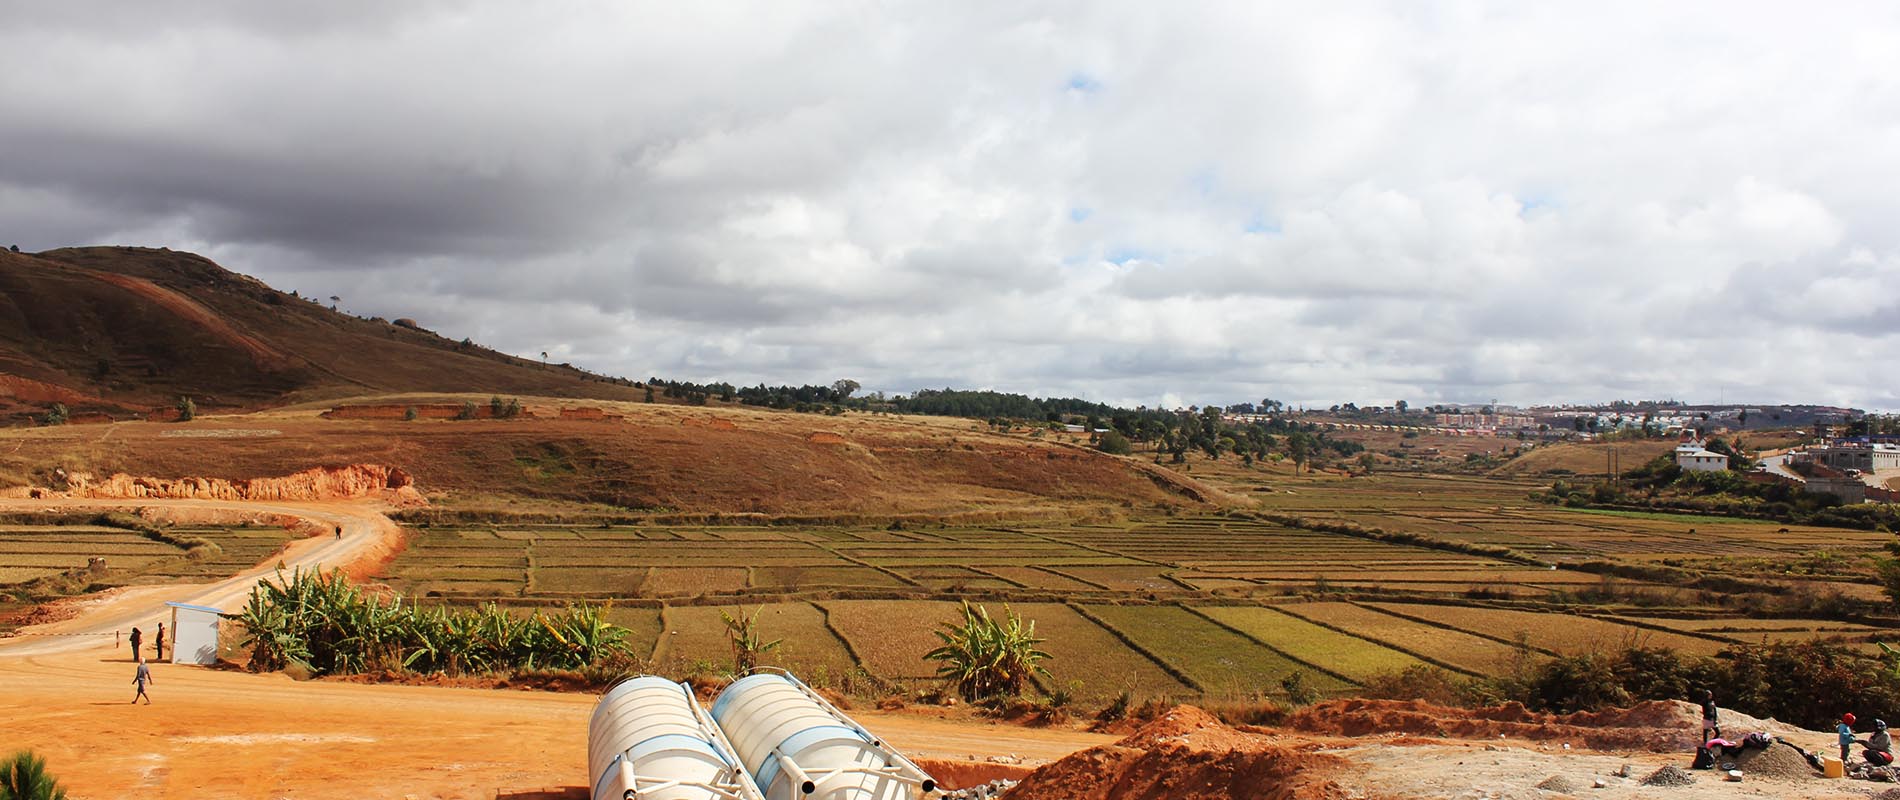 Norcross Madagascar Land Development